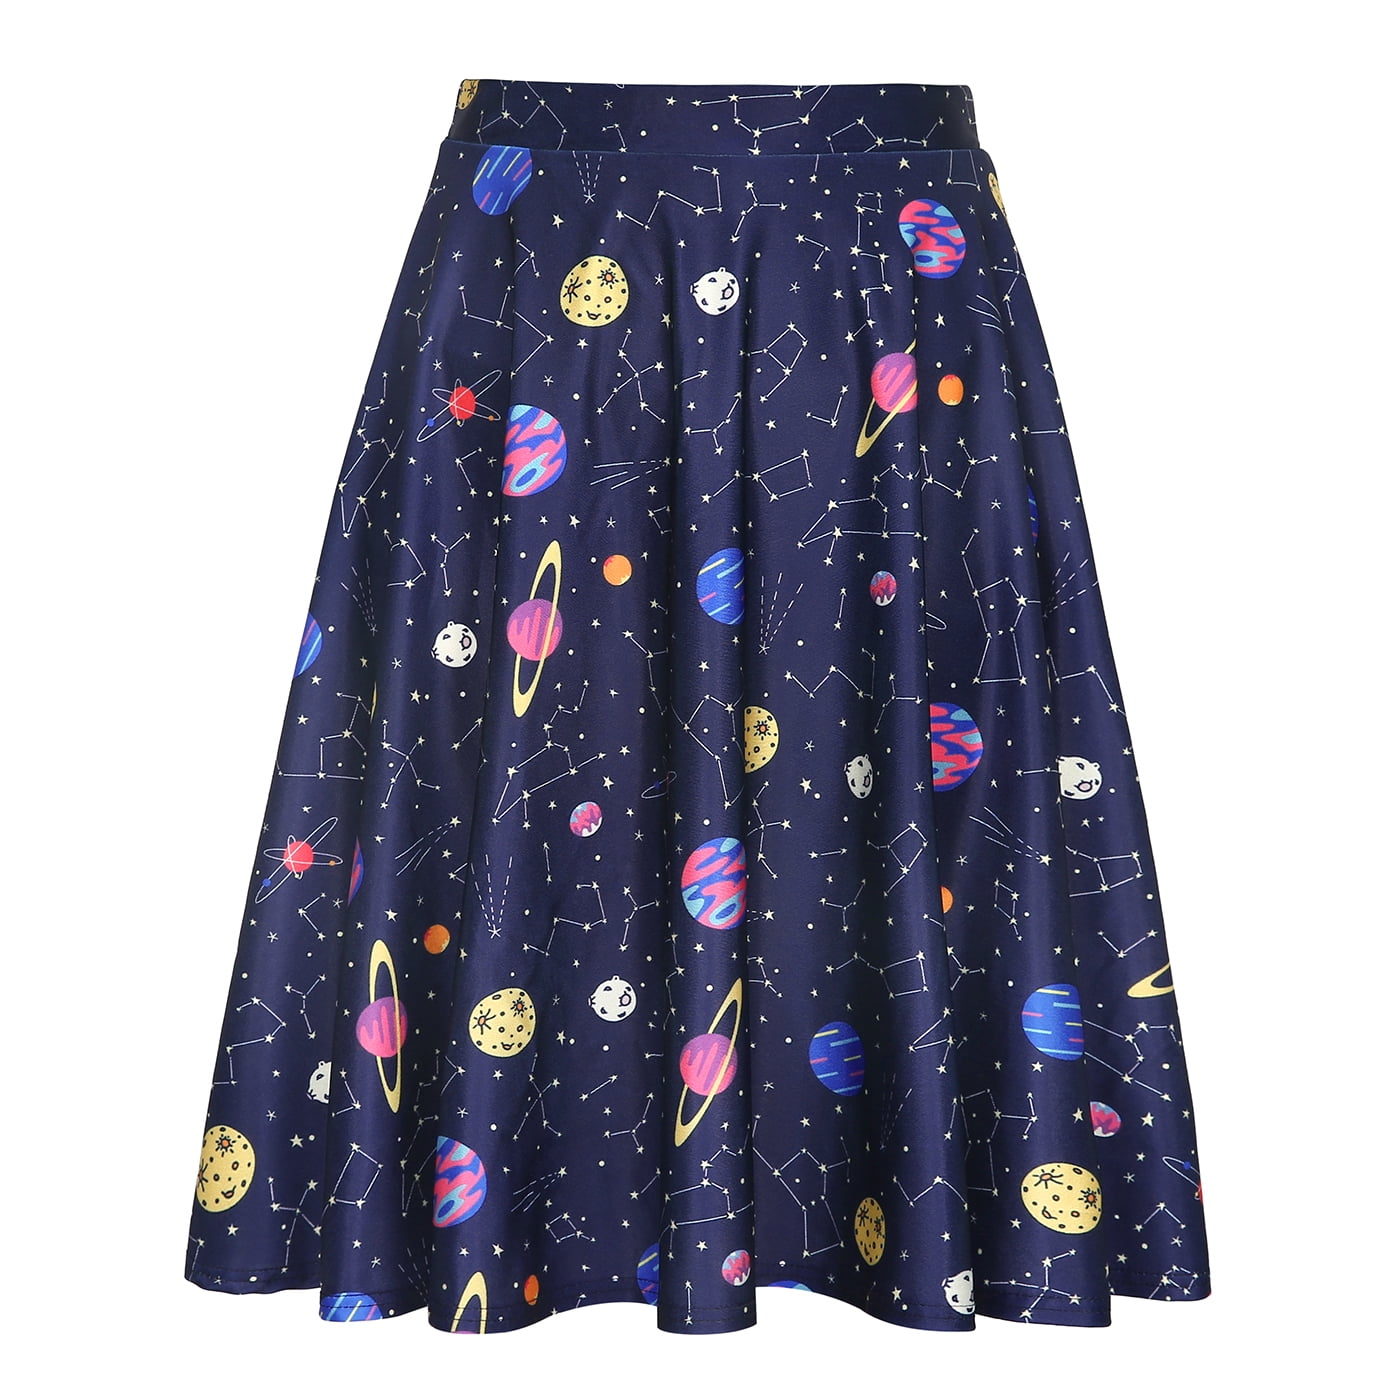 S.Charma Womens Vintage High Waisted Thin Denim Midi Skirt A-line Pleated Skirt with Pocket Plus Size S-6XL